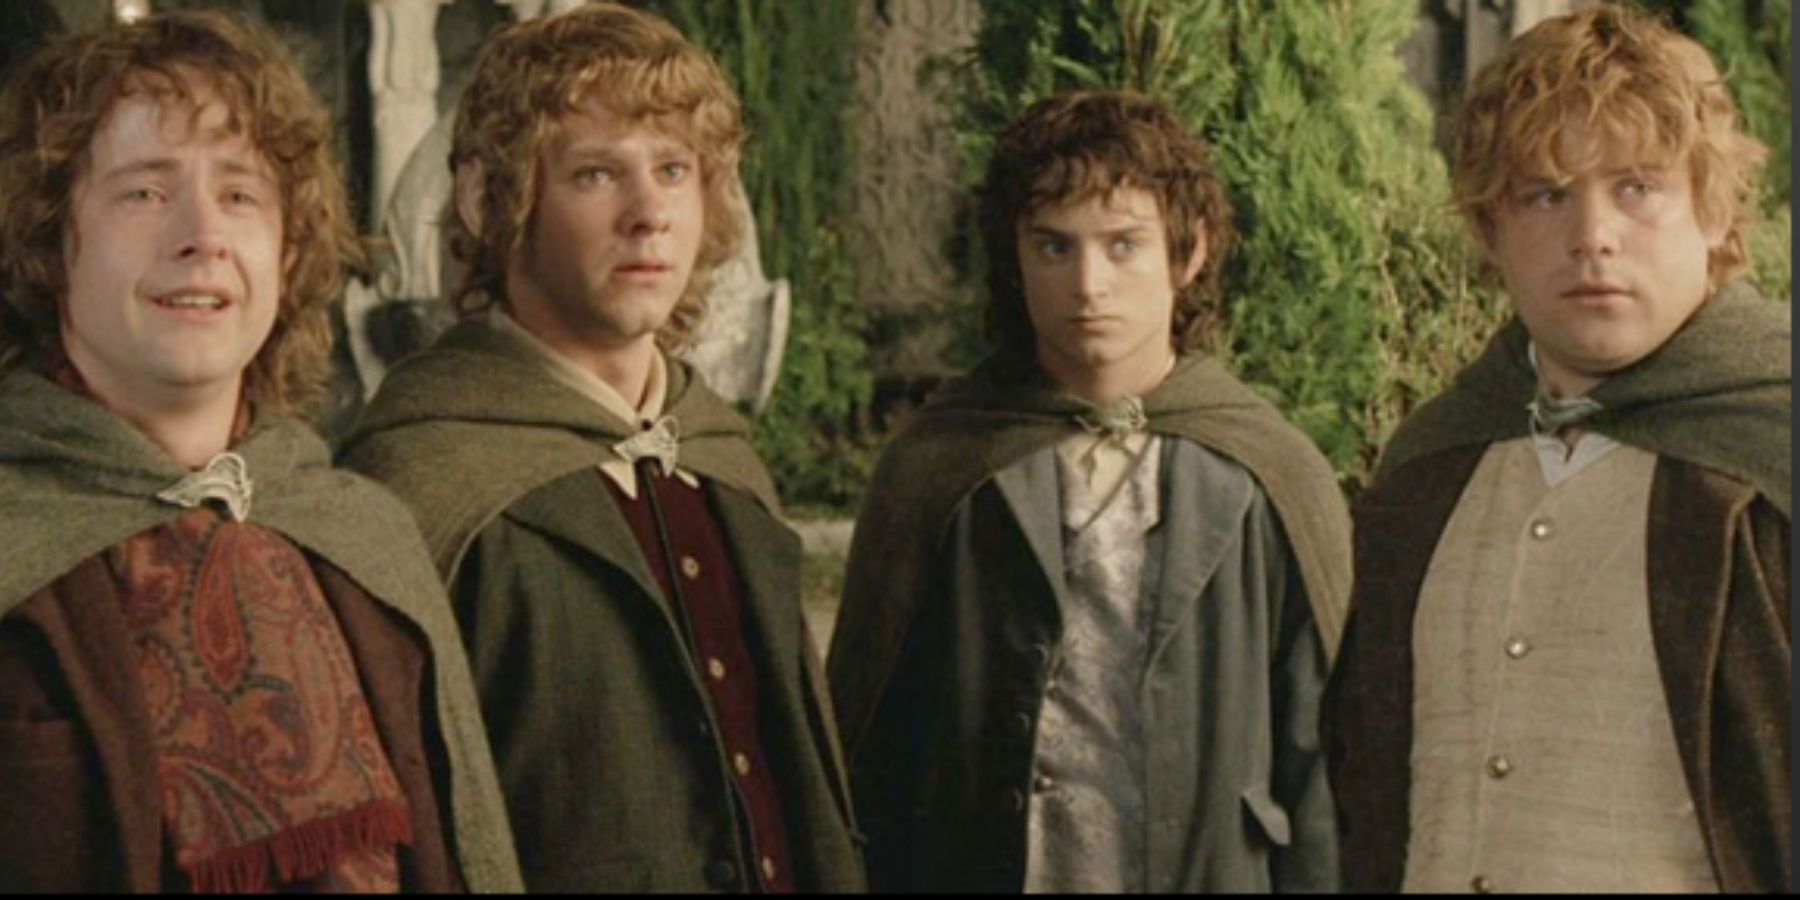 schermutseling Toneelschrijver Het kantoor Lord of the Rings: What Happened To Frodo After He Left Middle Earth?